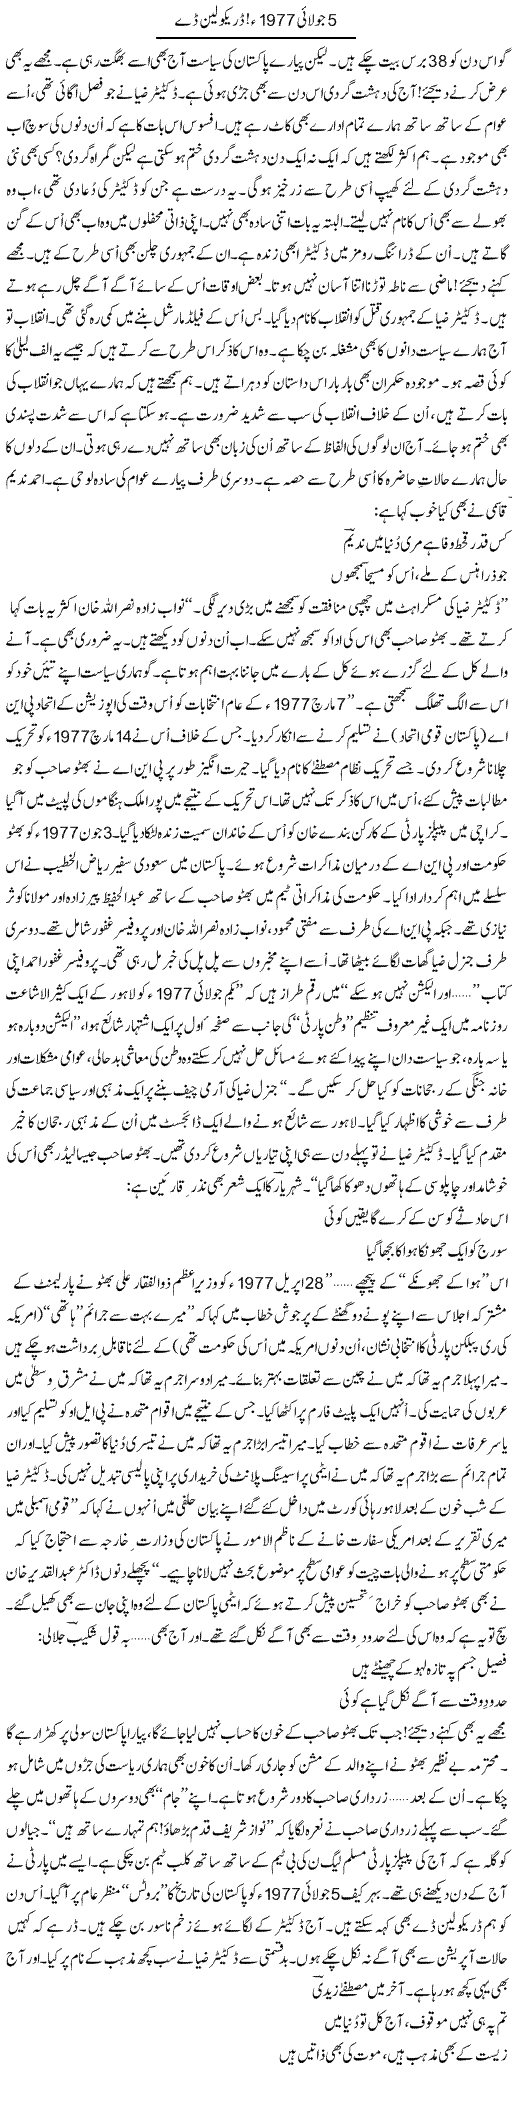 5 July 1977, Dracoline Day | Ejaz Hafeez Khan | Daily Urdu Columns